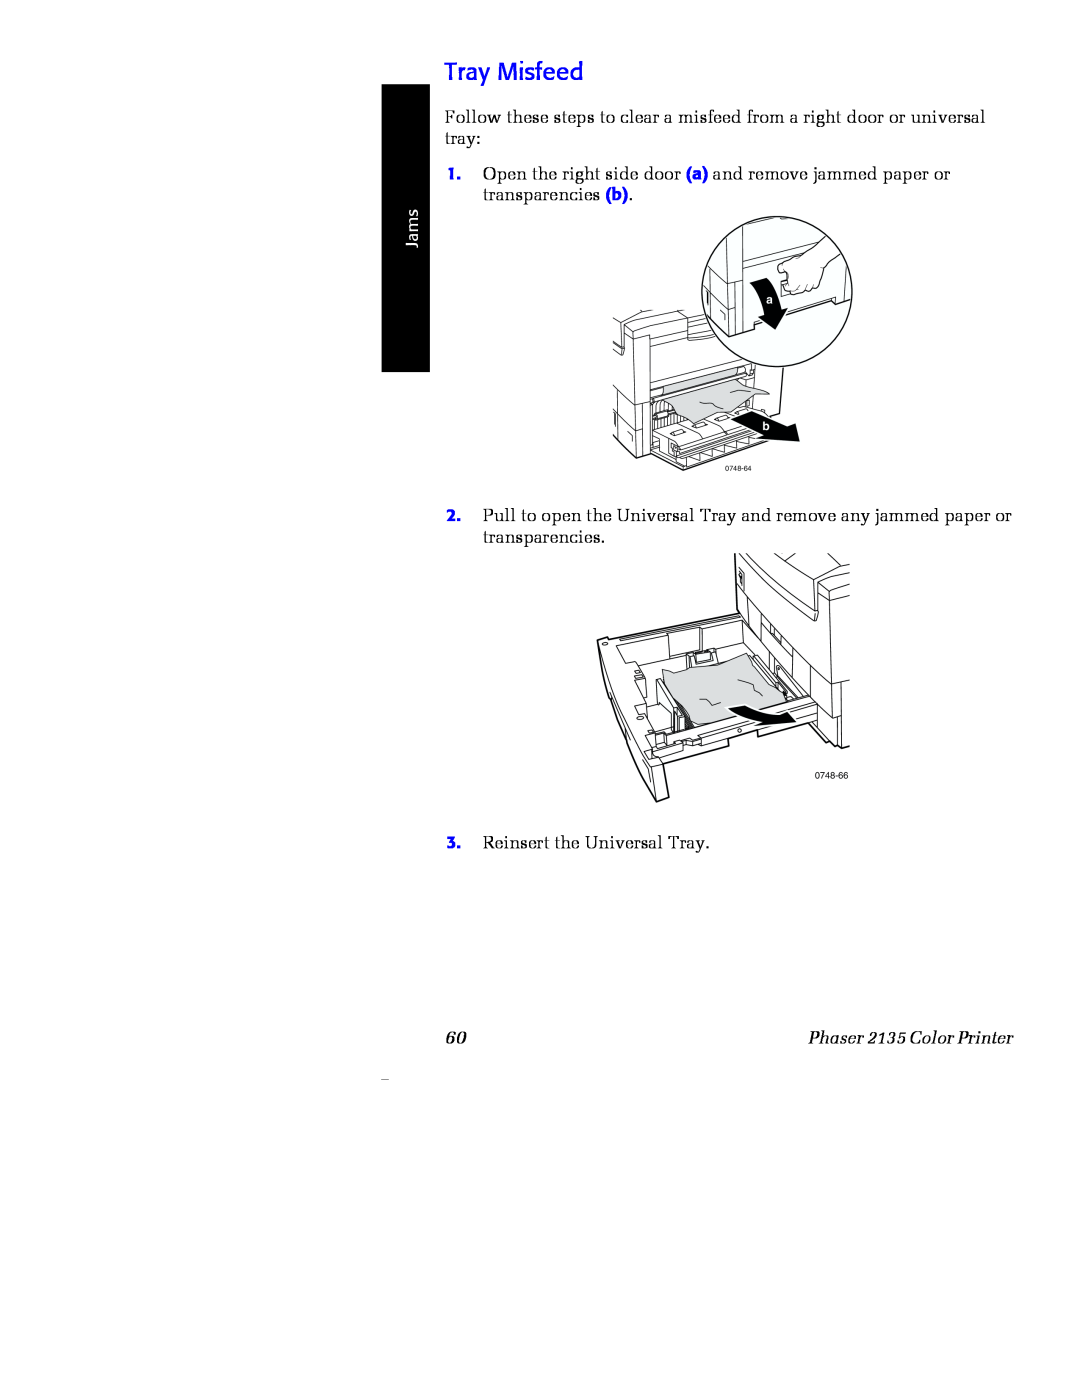 Xerox manual Tray Misfeed, Jams, Phaser 2135 Color Printer 